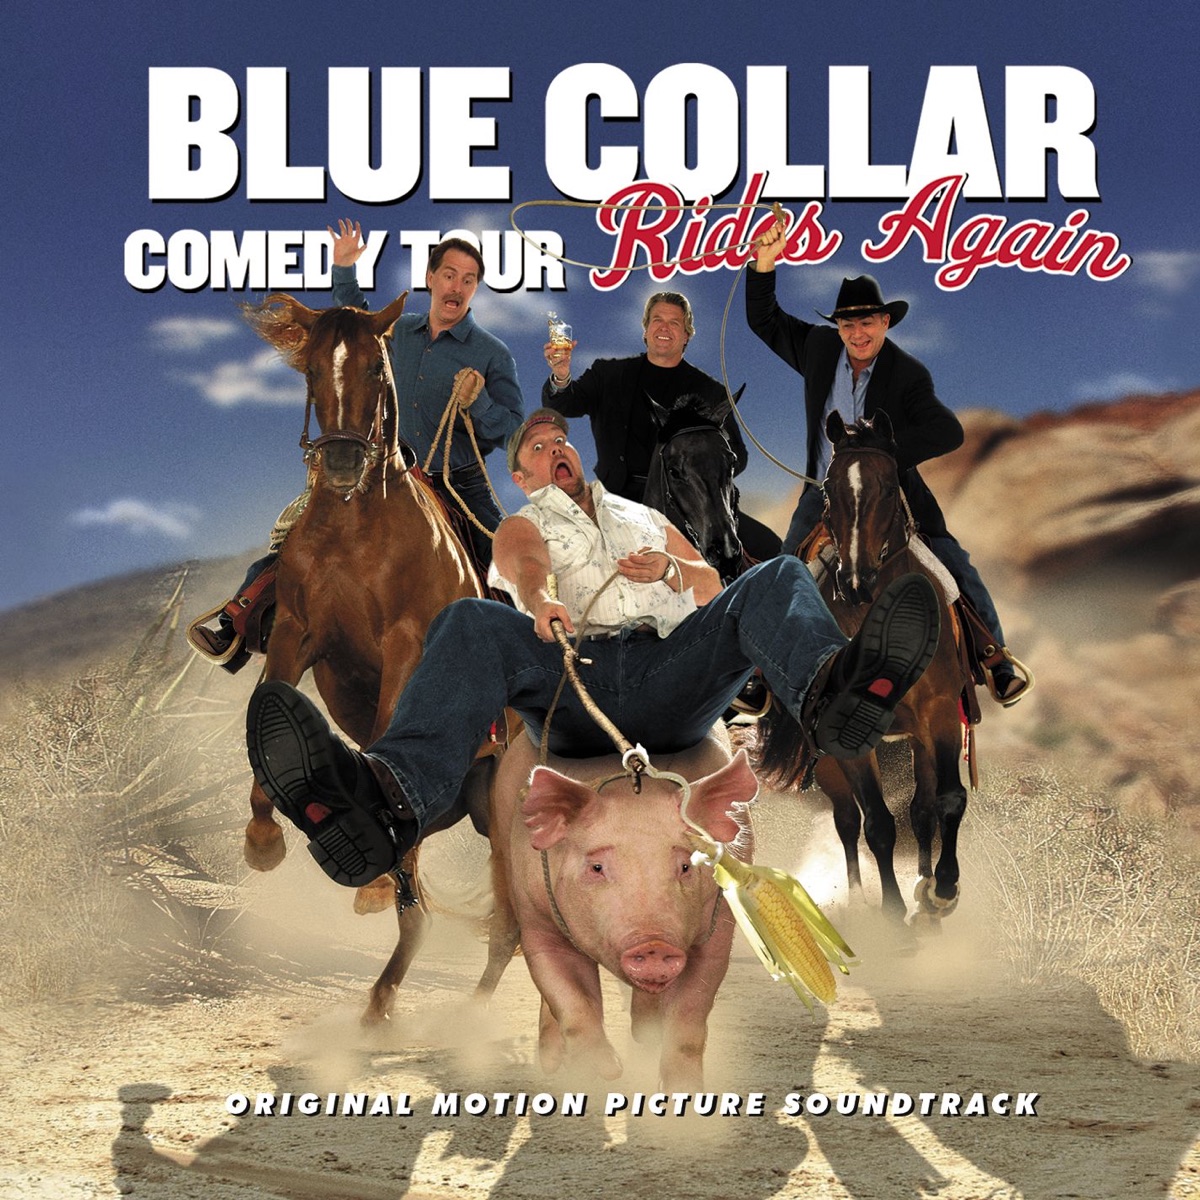 Blue Collar Comedy Tour Rides Again (Original Motion Picture Soundtrack) -  Album by Various Artists - Apple Music